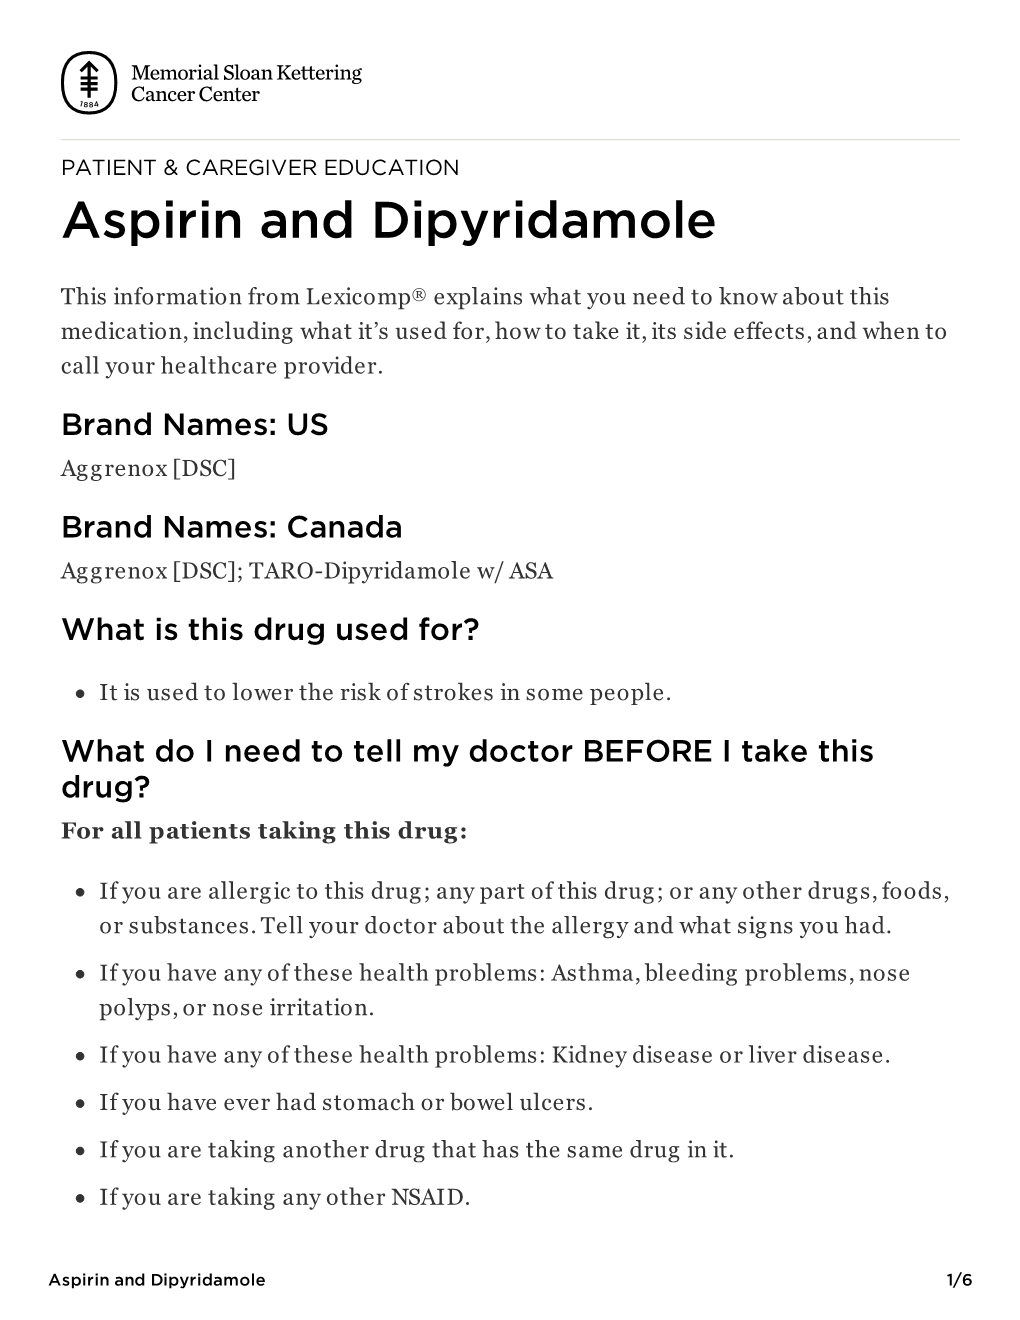 Aspirin and Dipyridamole